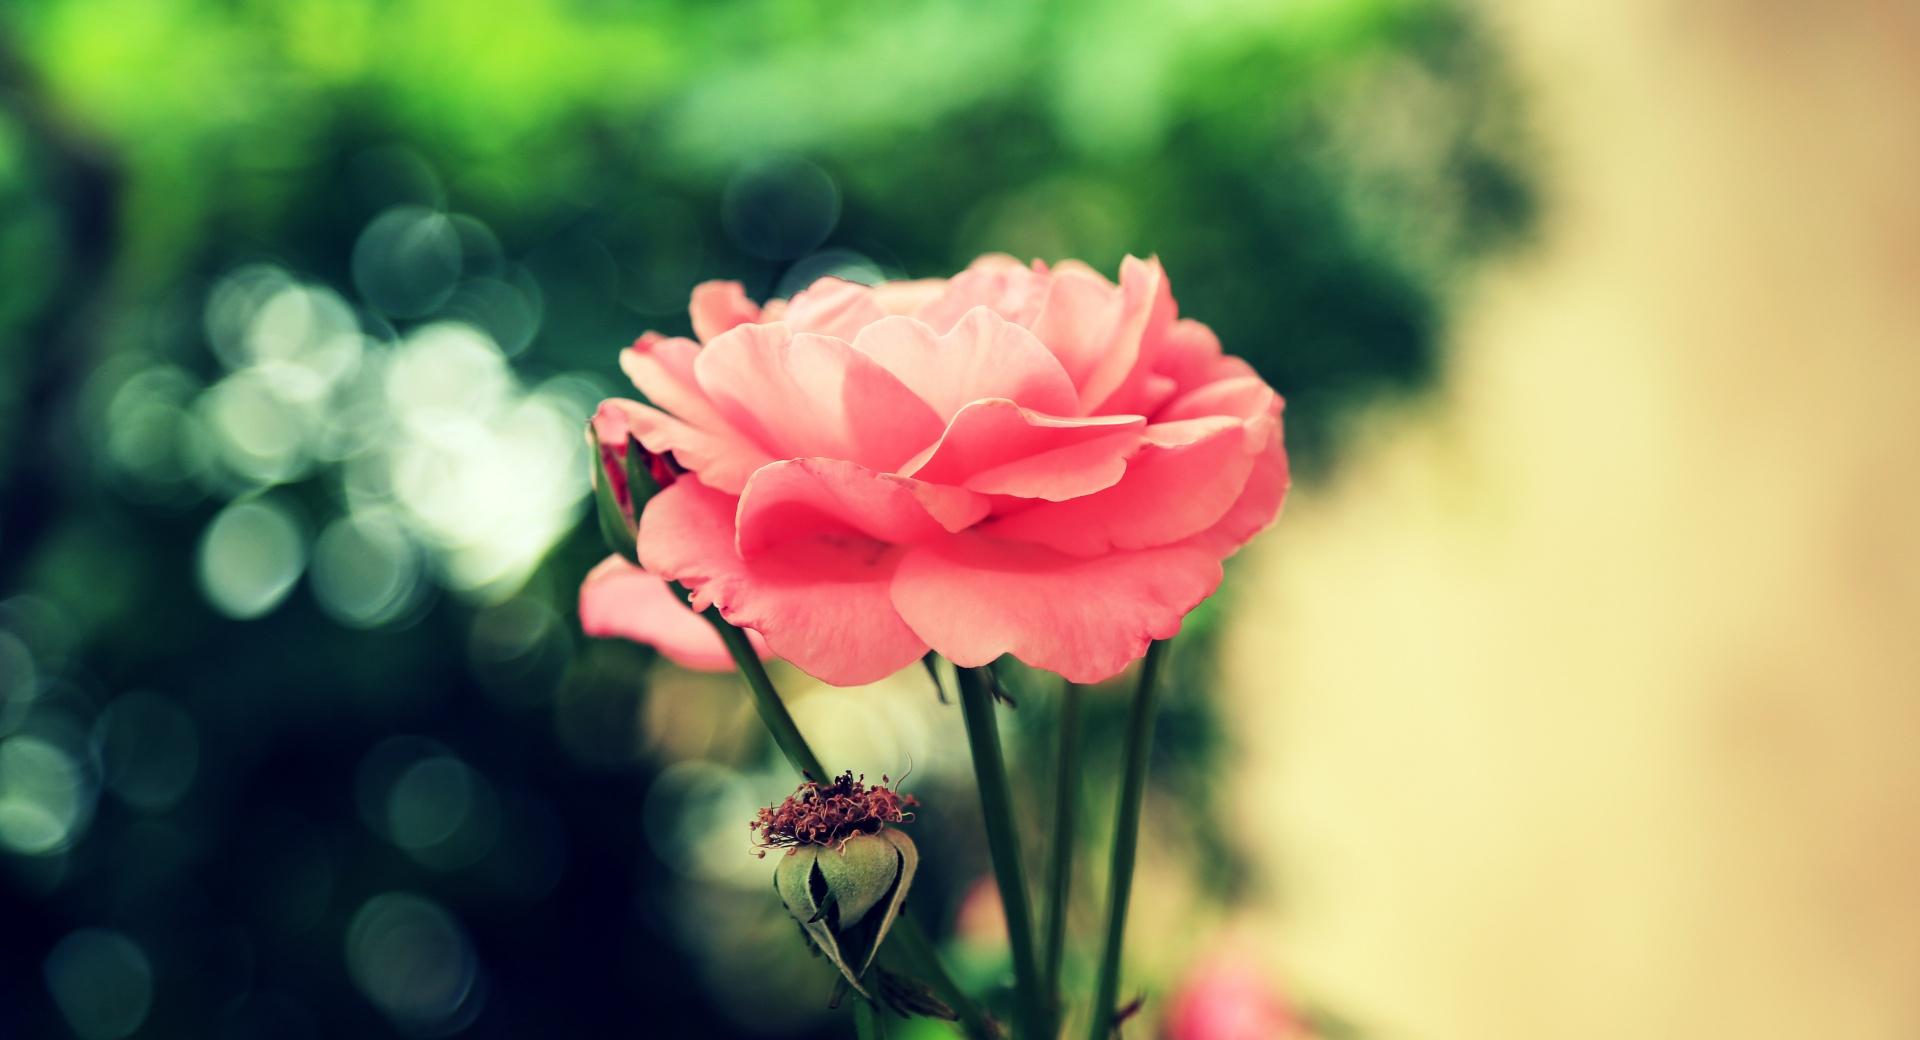 Farsejin Pink Flower at 1024 x 1024 iPad size wallpapers HD quality